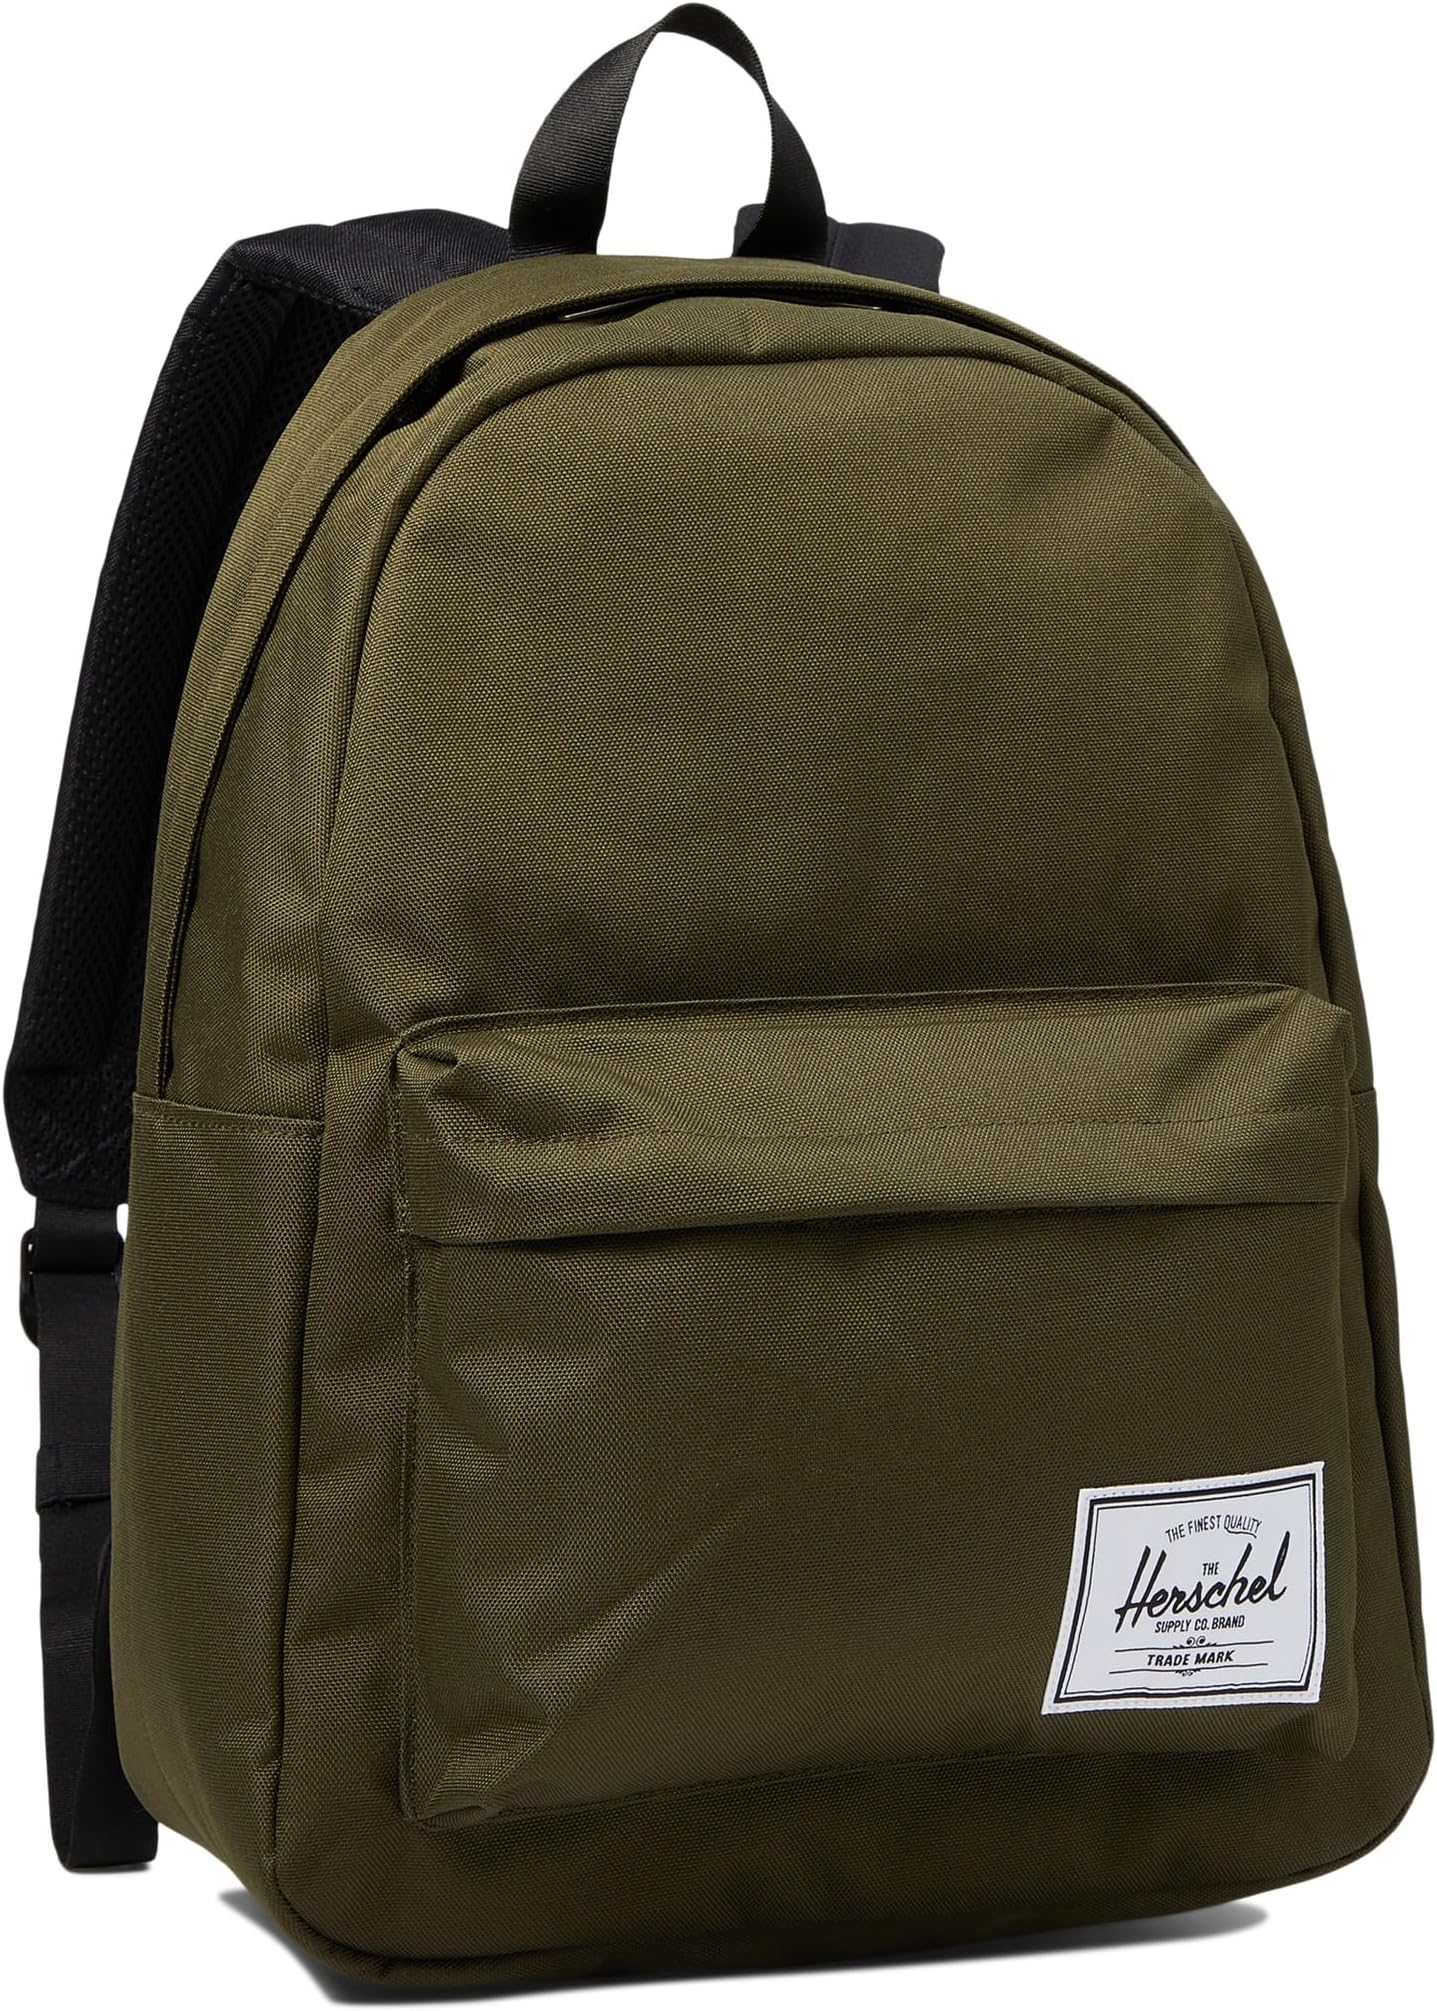 рюкзак heritage backpack herschel supply co цвет ivy green chicory coffee Рюкзак Classic Backpack Herschel Supply Co., цвет Ivy Green